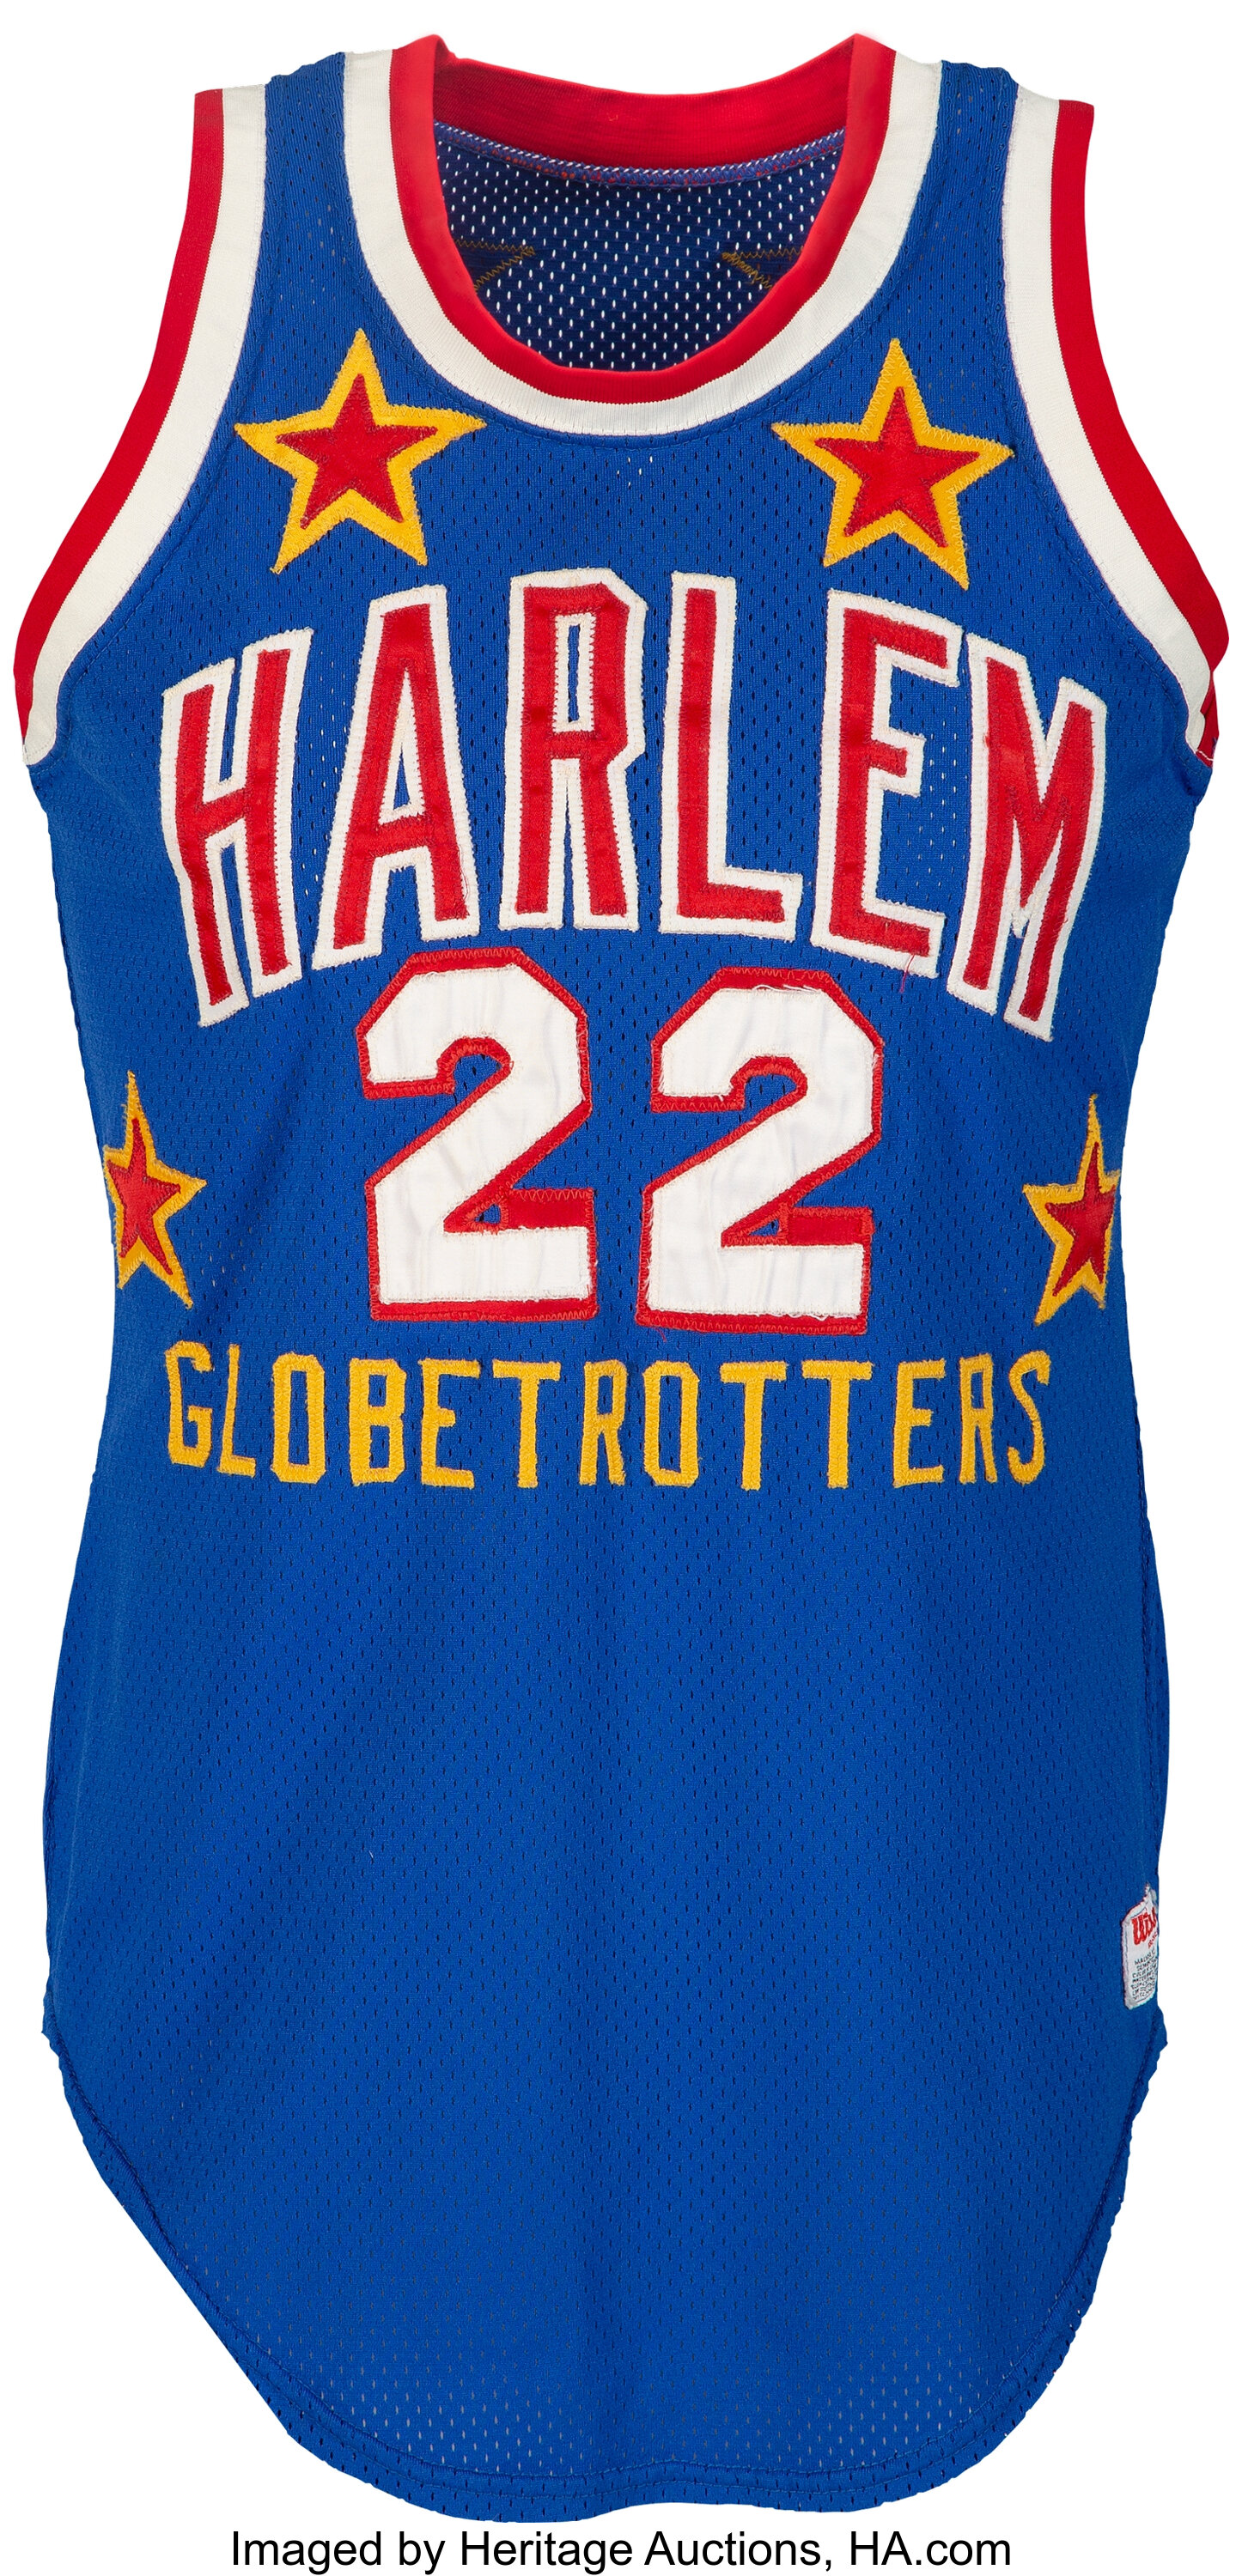 The Harlem Globetrotters Get A Stylish Uniform Update